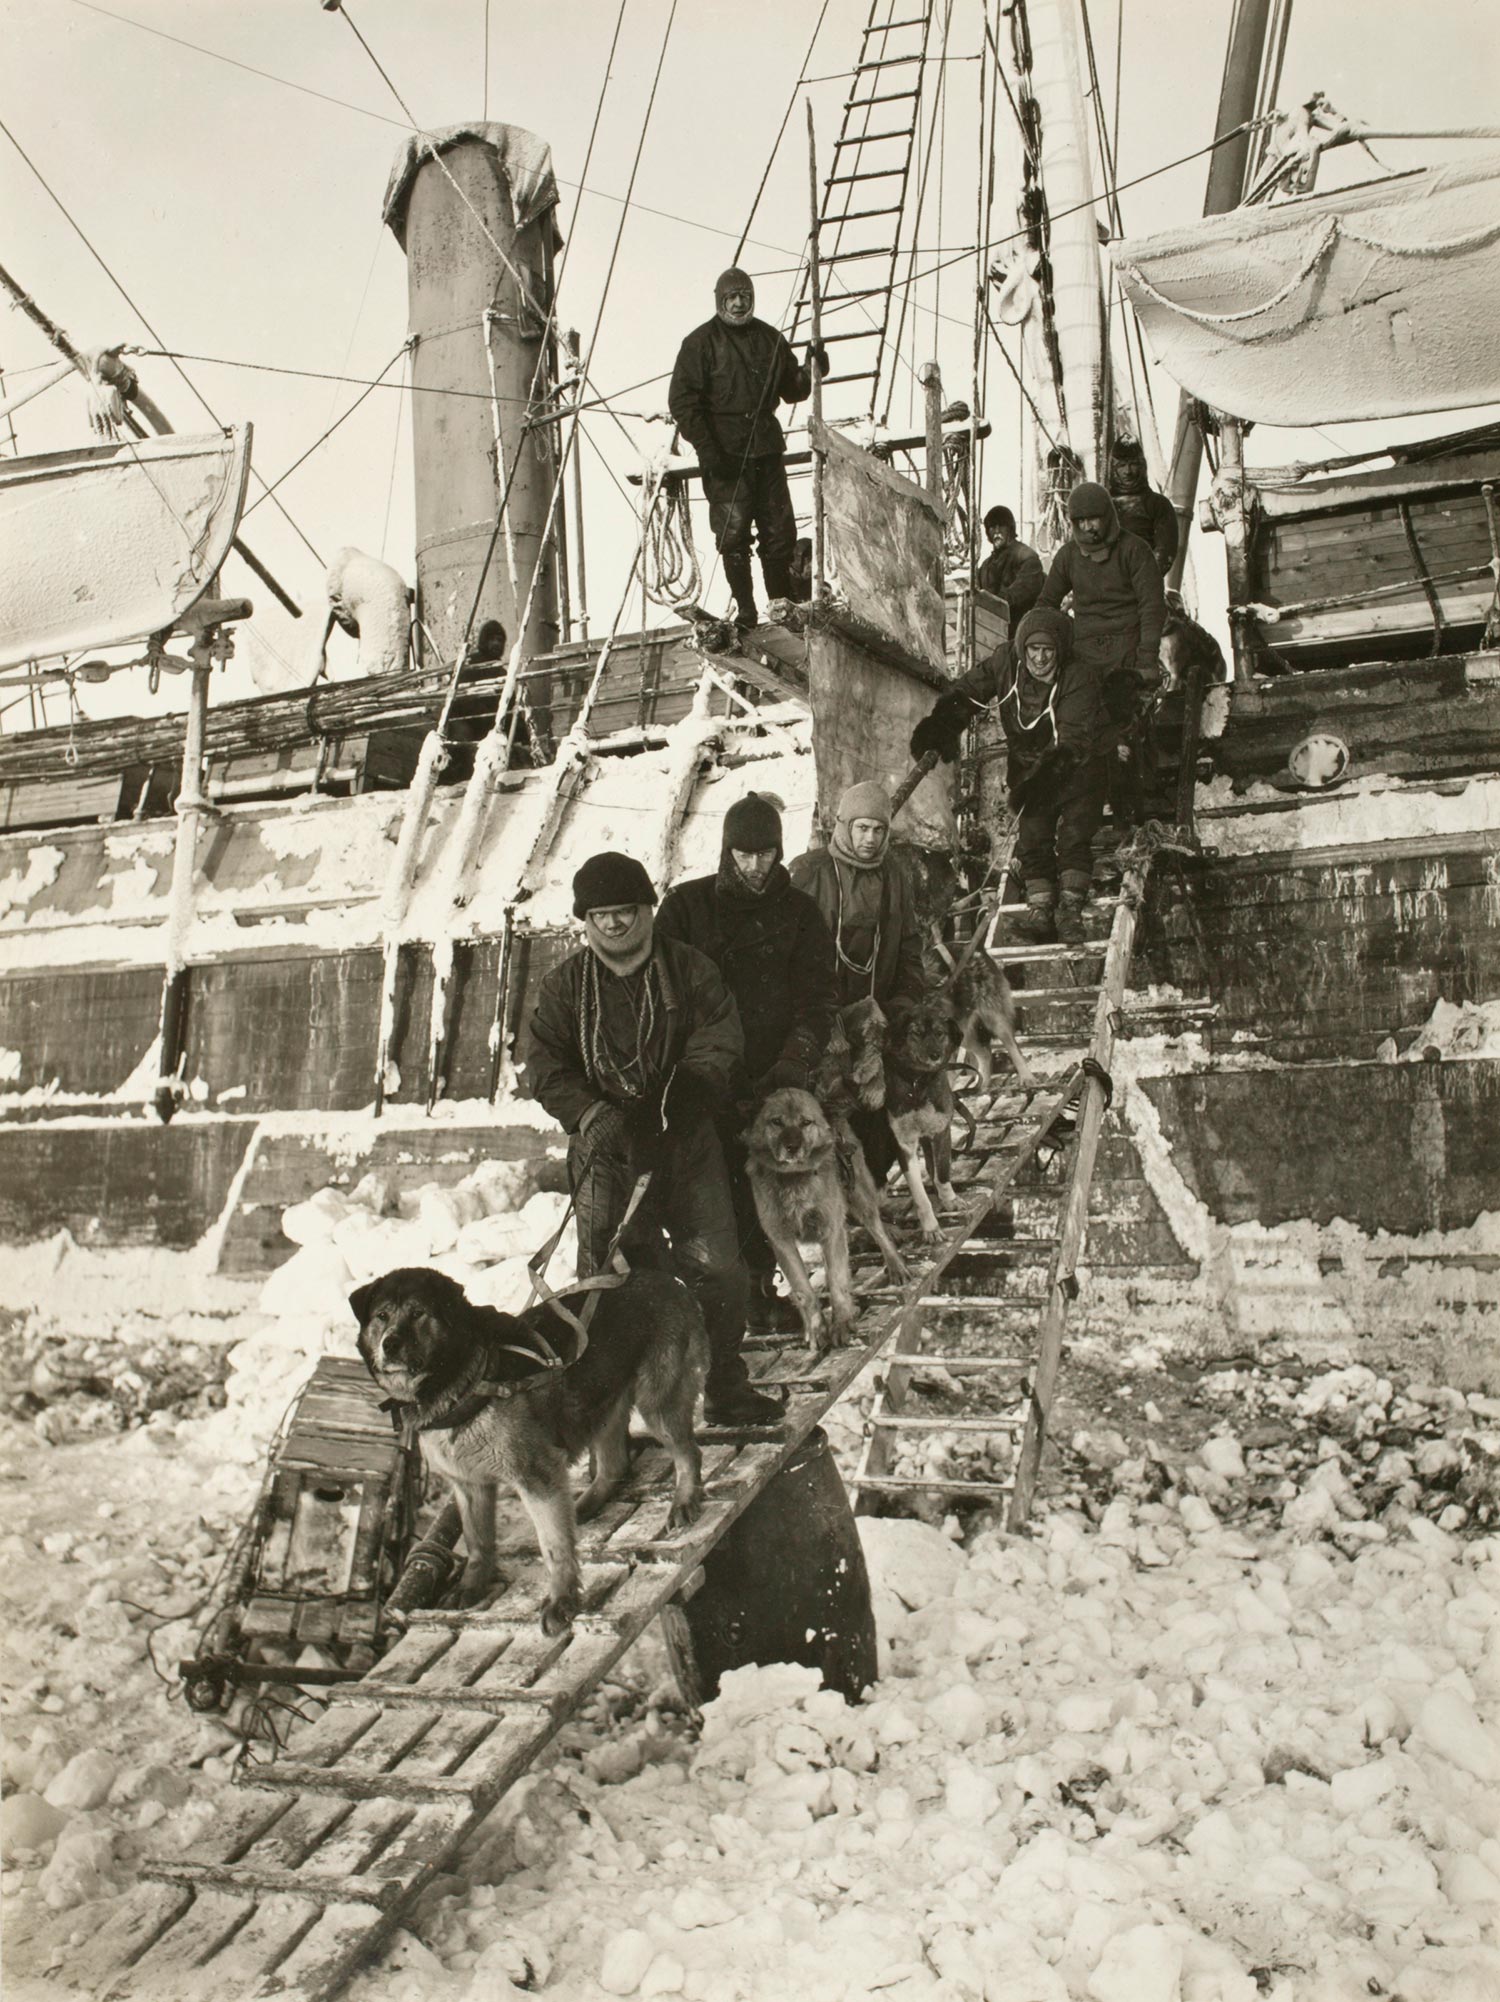 Ernest Shackleton supervises sailors taking sled dogs down gangplank onto frozen water